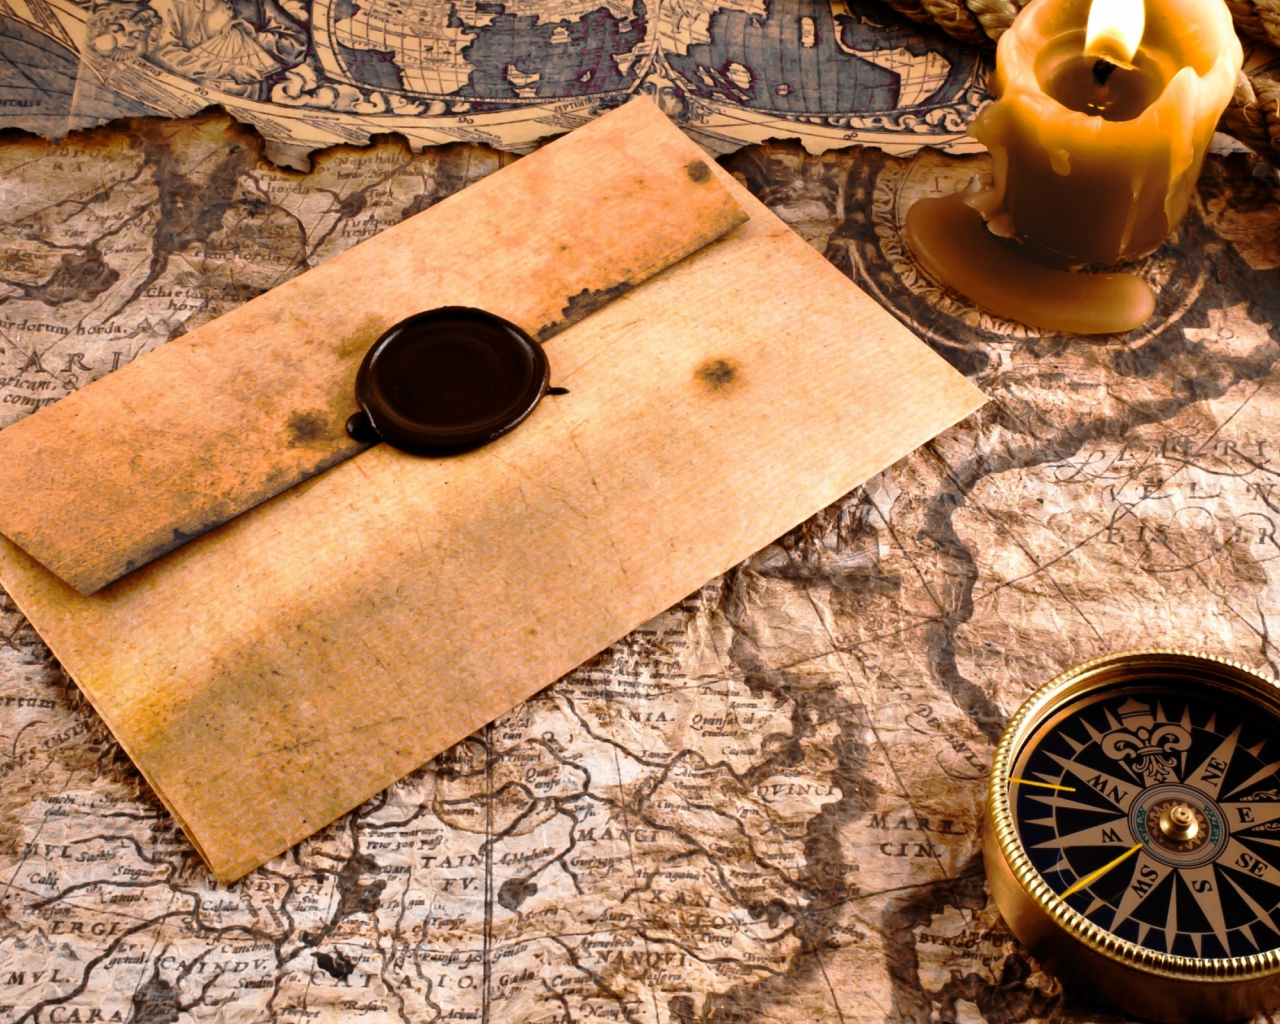 компас, карта, письмо, с сургучом